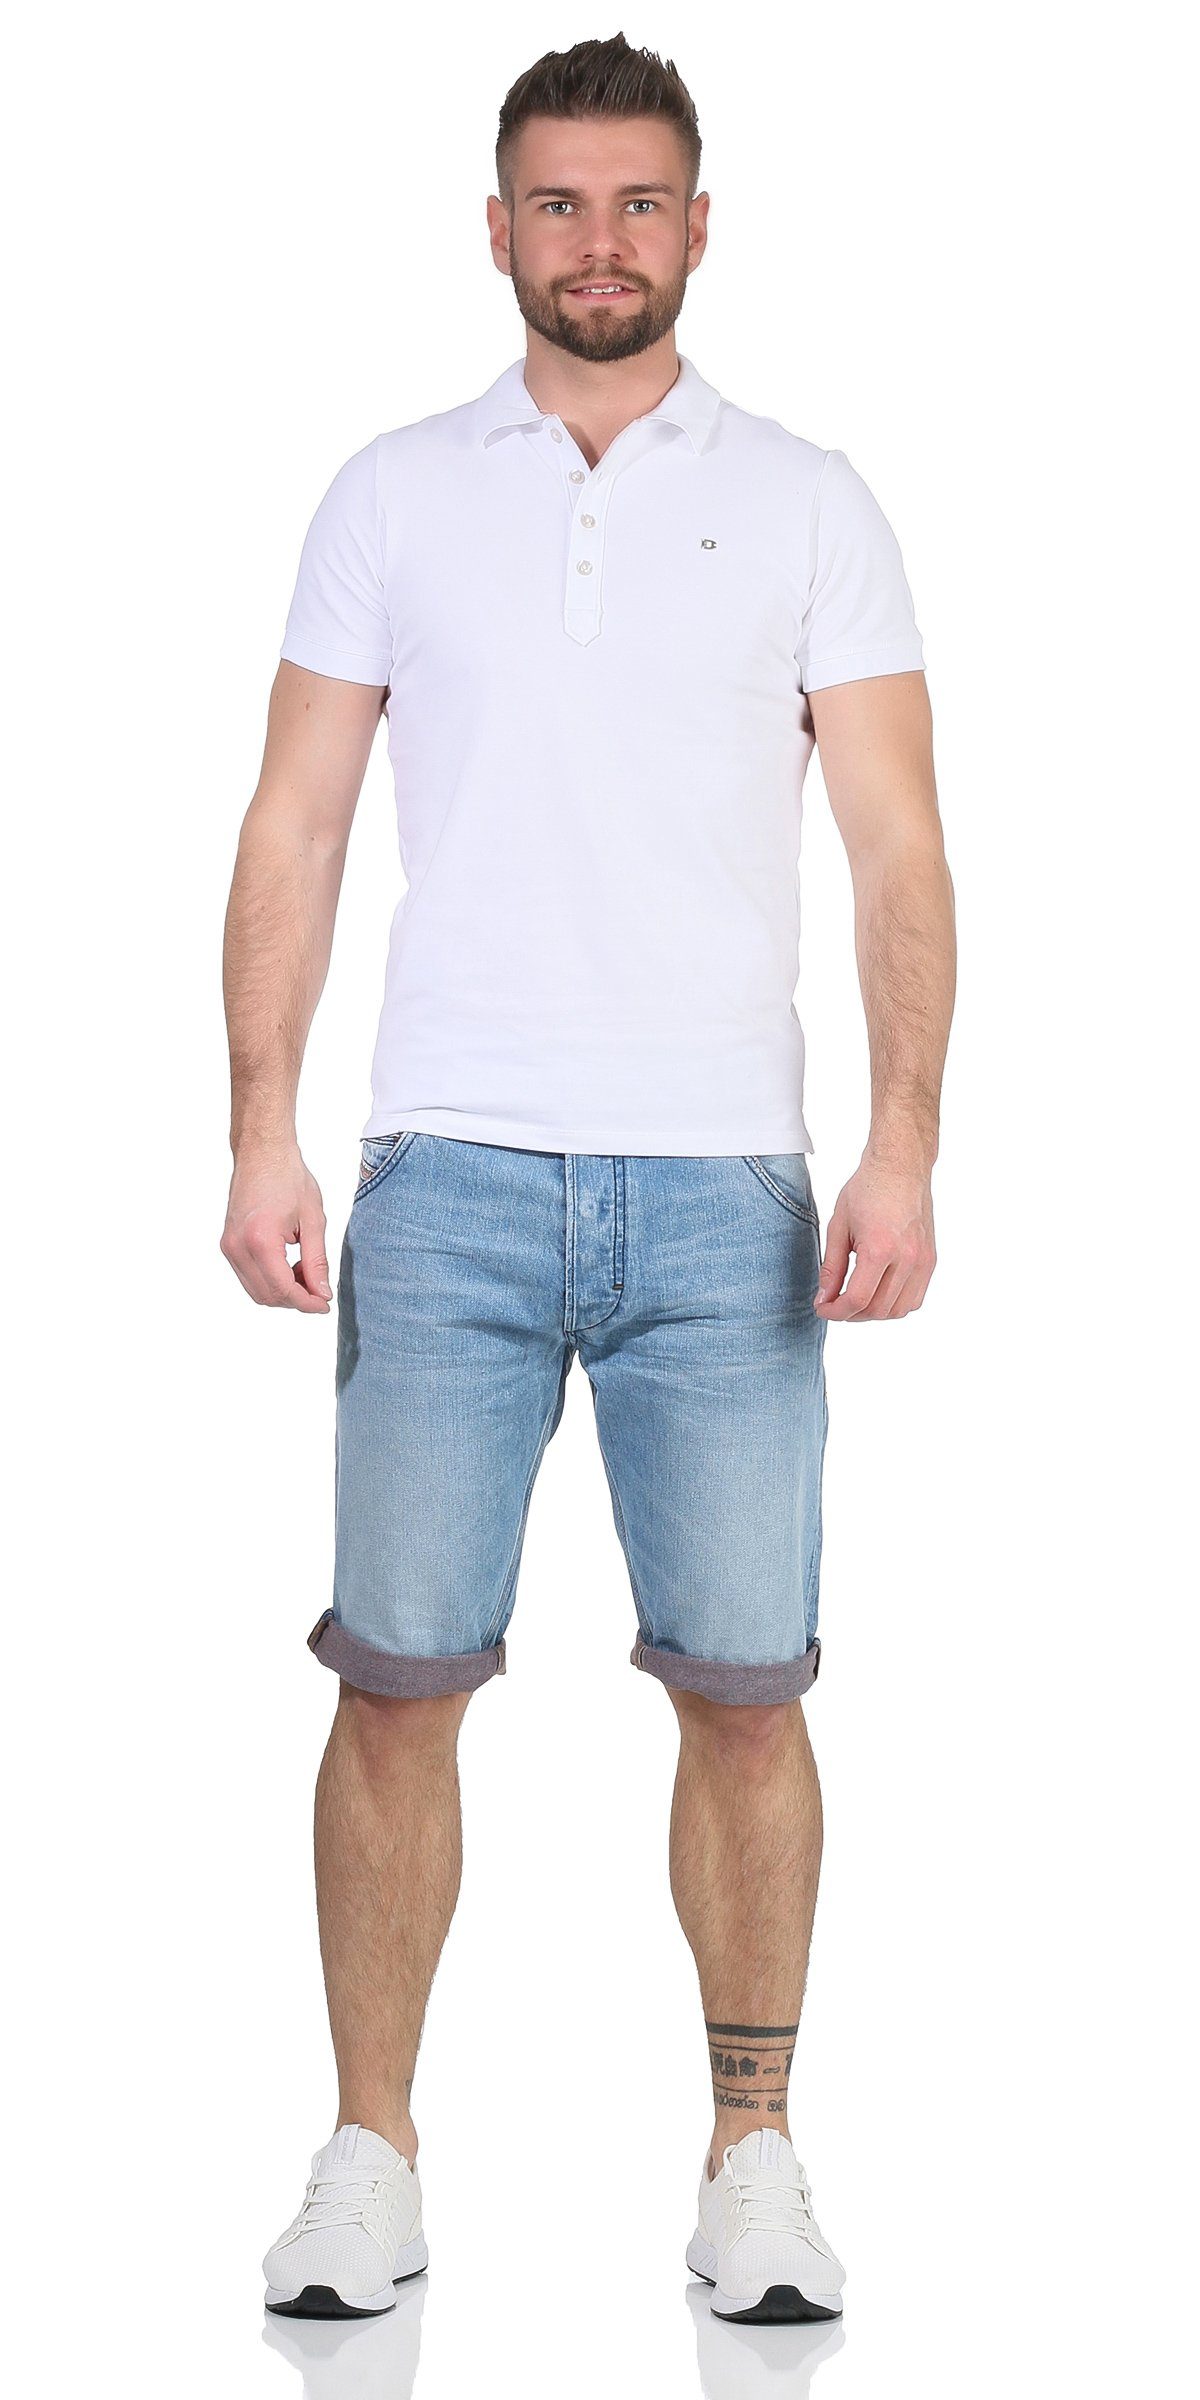 Diesel Herren kurze Shorts Used-Look Hellblau Hose dezenter Shorts, R18K5 RG48R Kroshort Jeansshorts Jeans